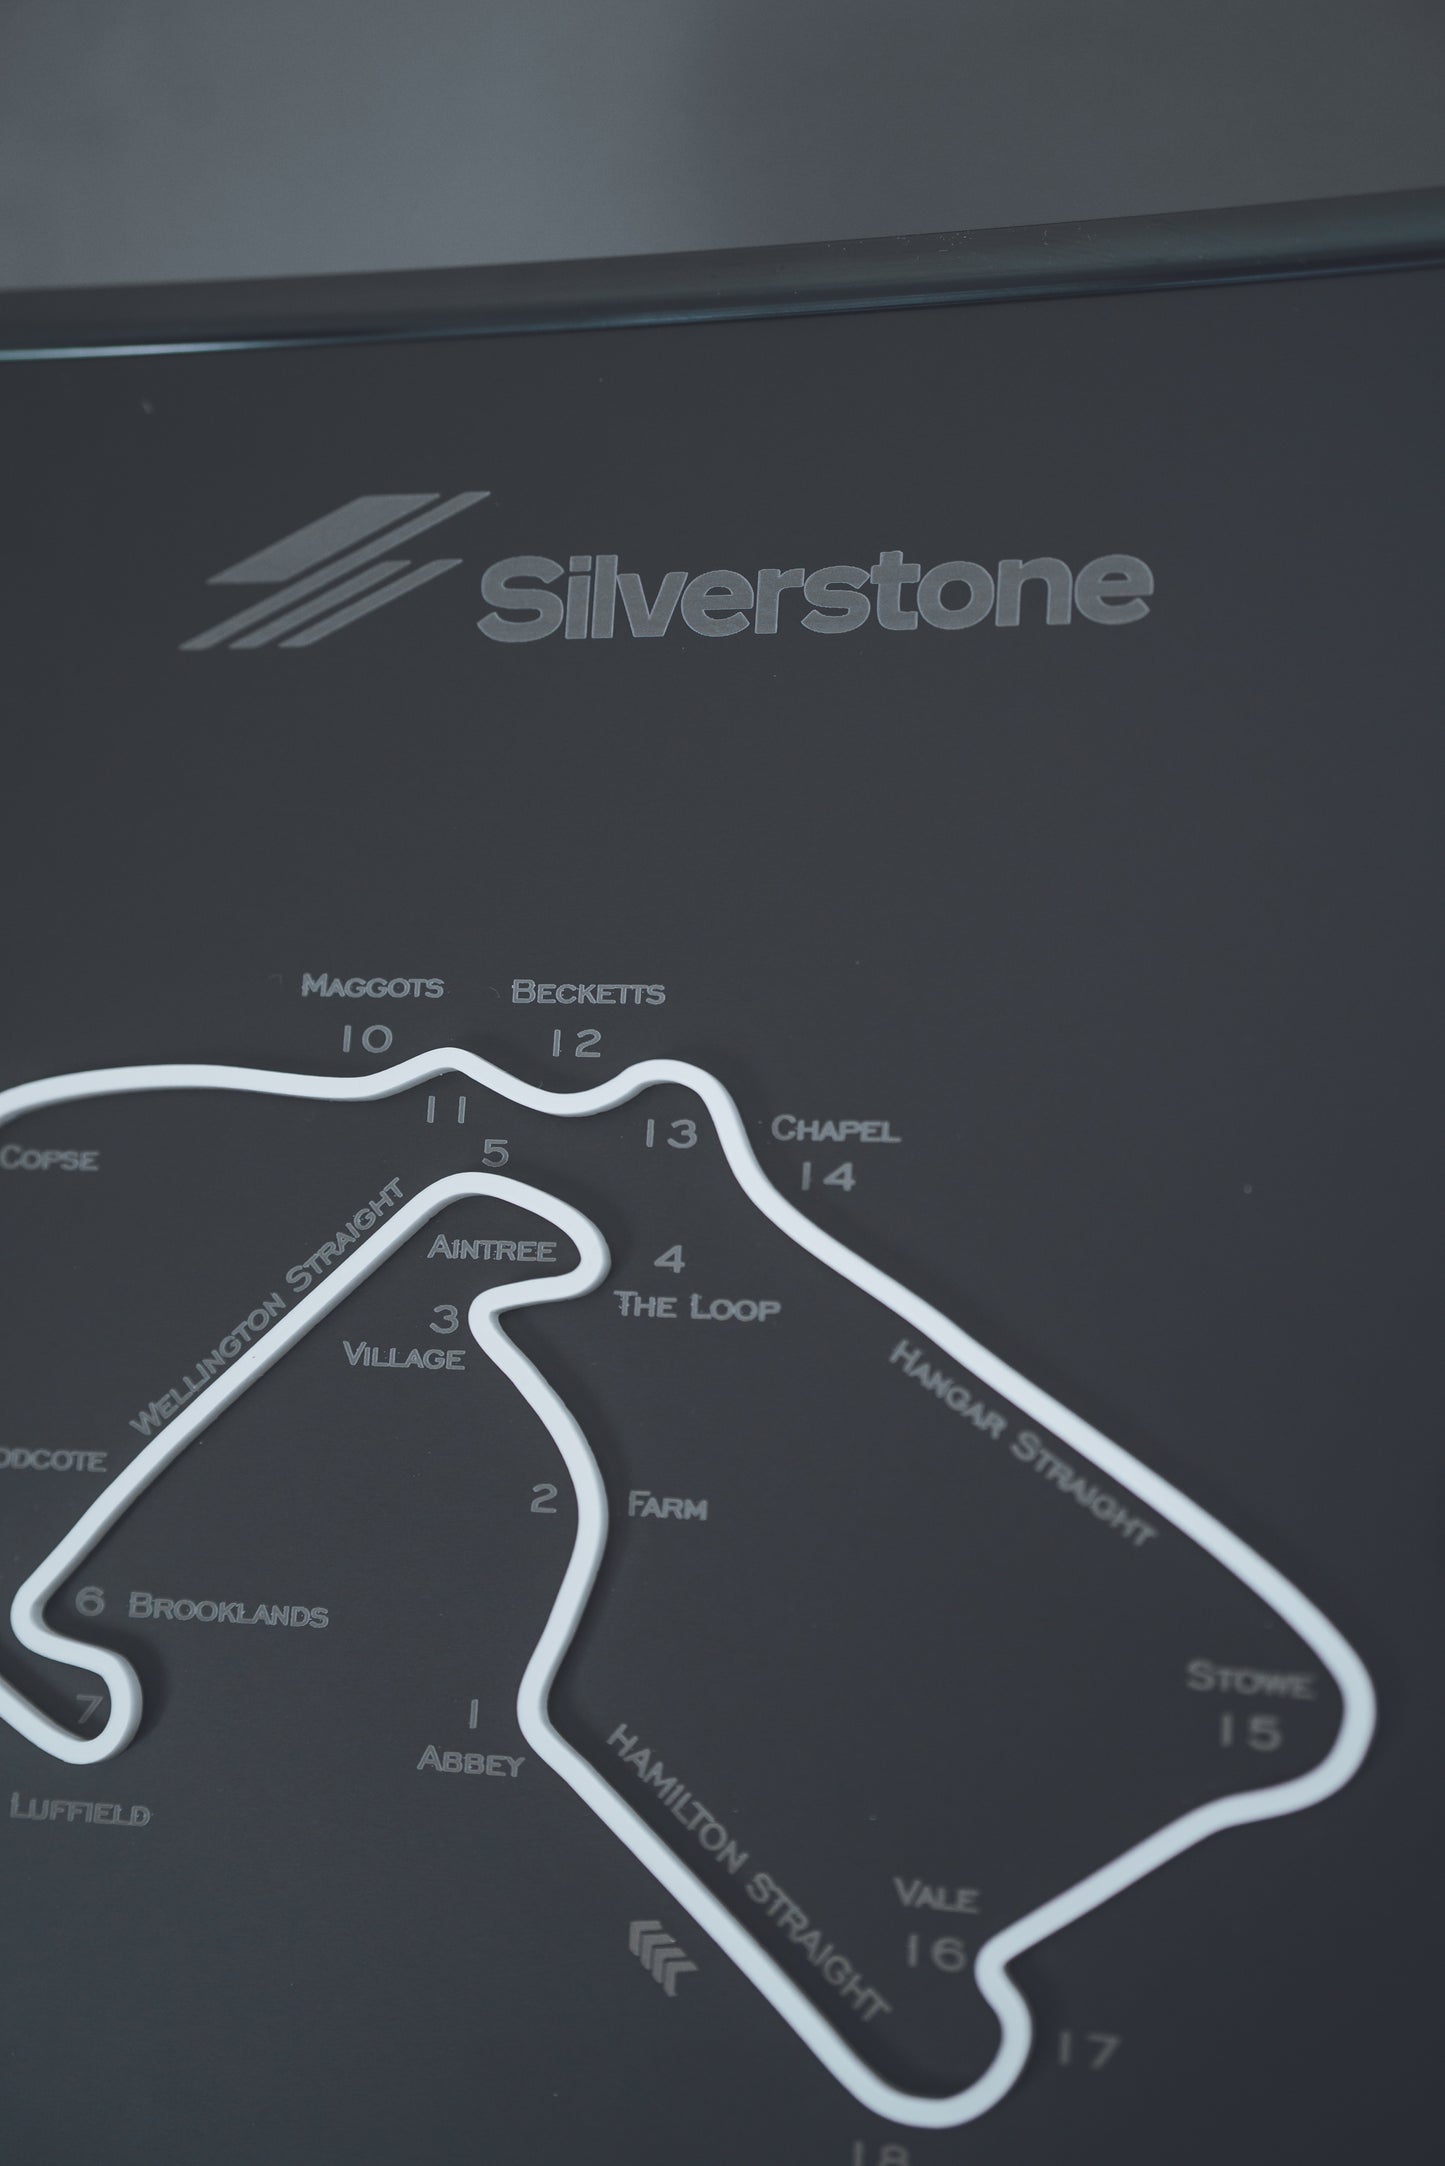 Silverstone